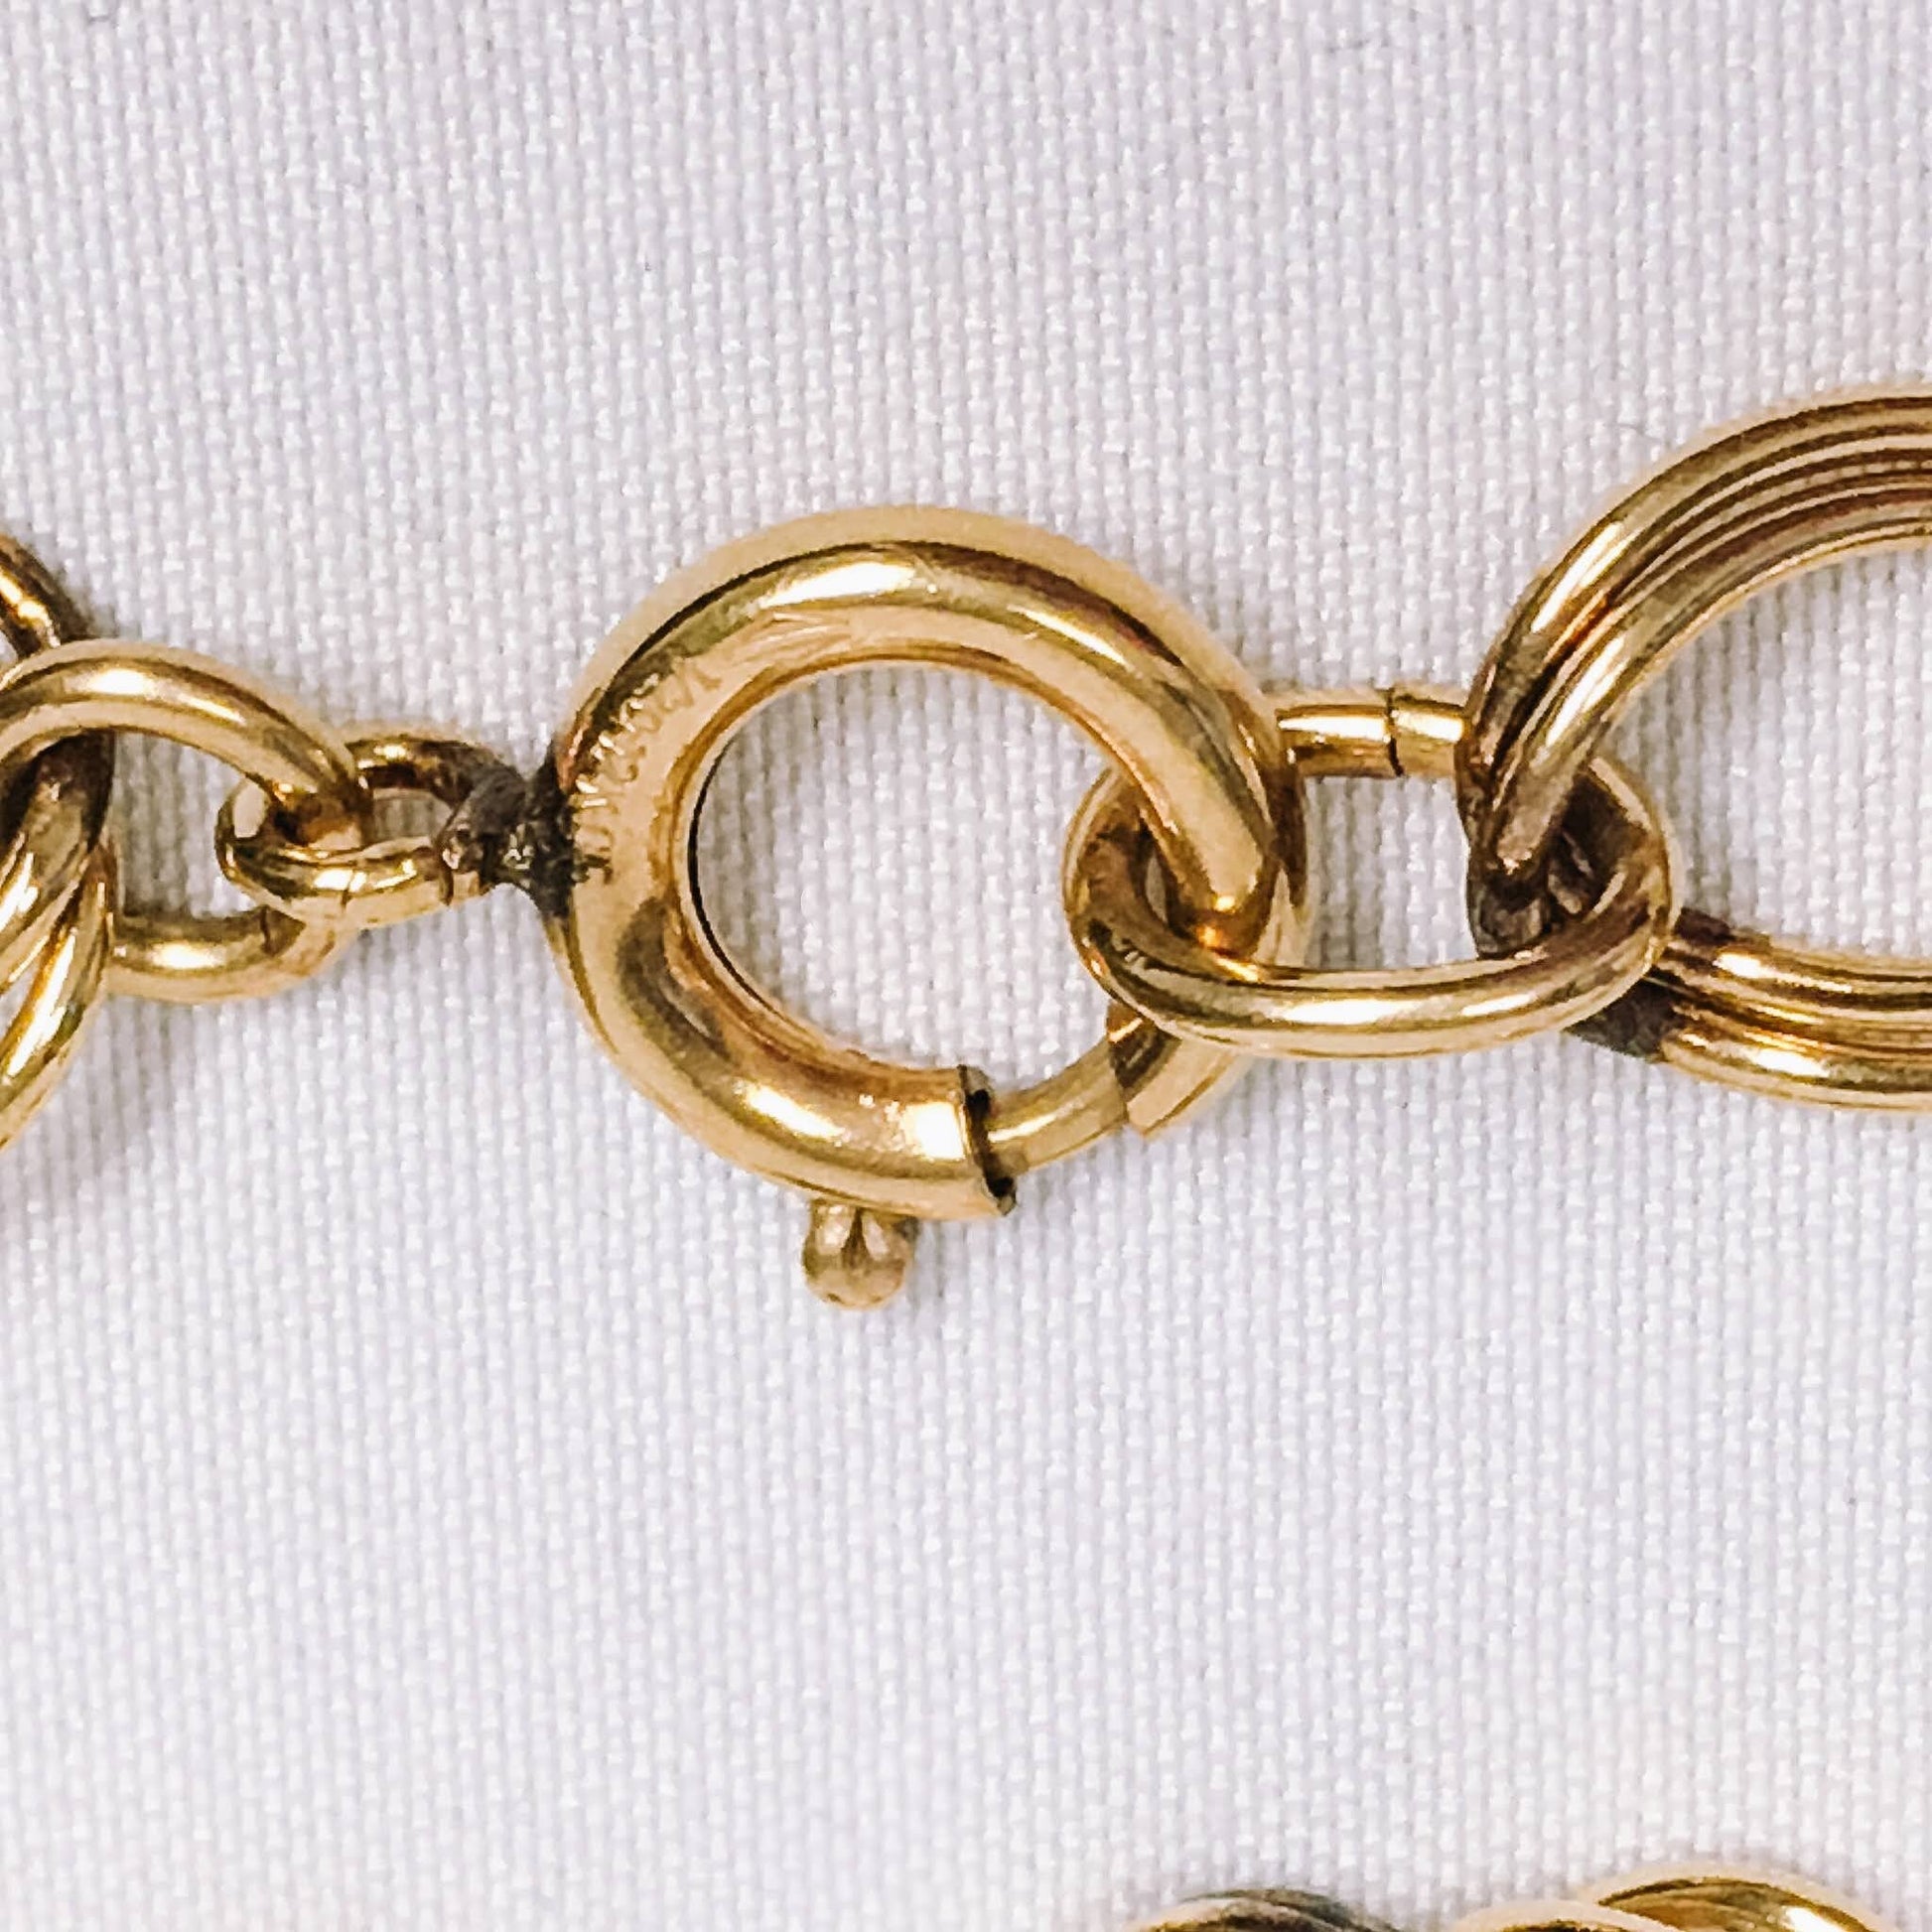 Vintage 12k Gold Filled Thin Chain Link Bracelet, Vintage Dainty Gold Filled Jewelry